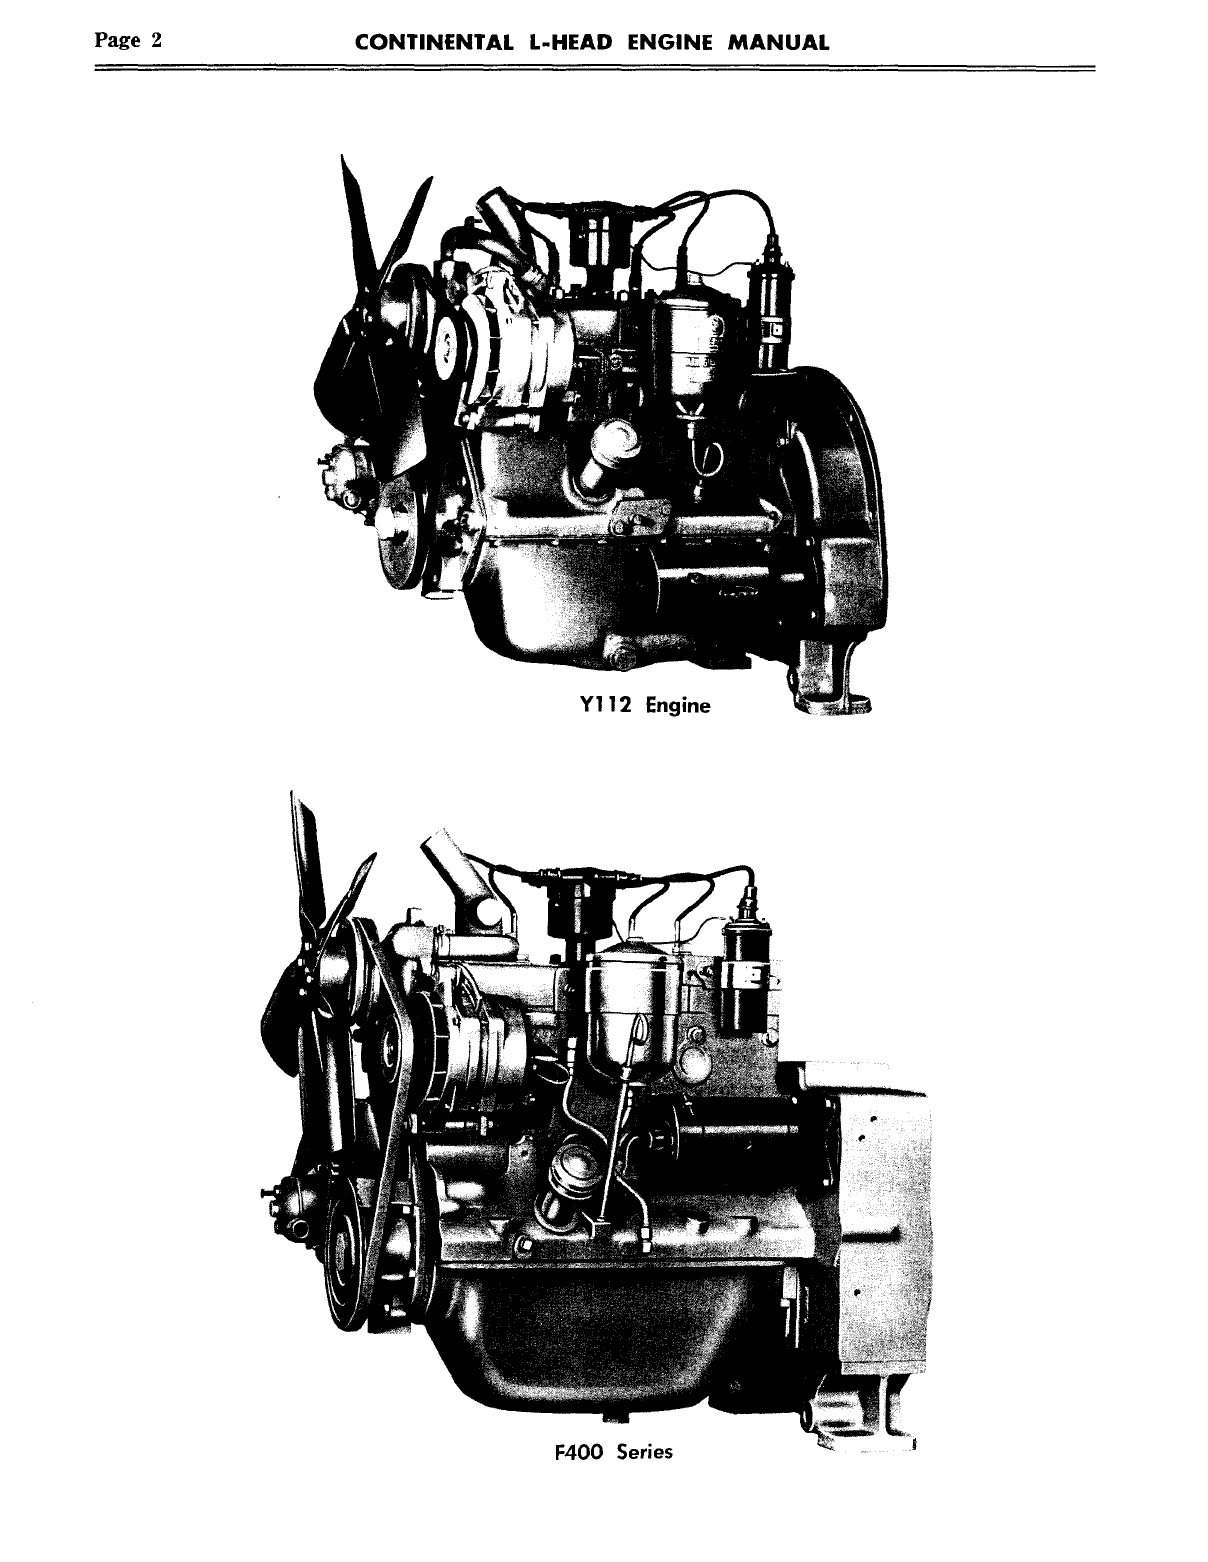 Continental F 163 Engine Manual